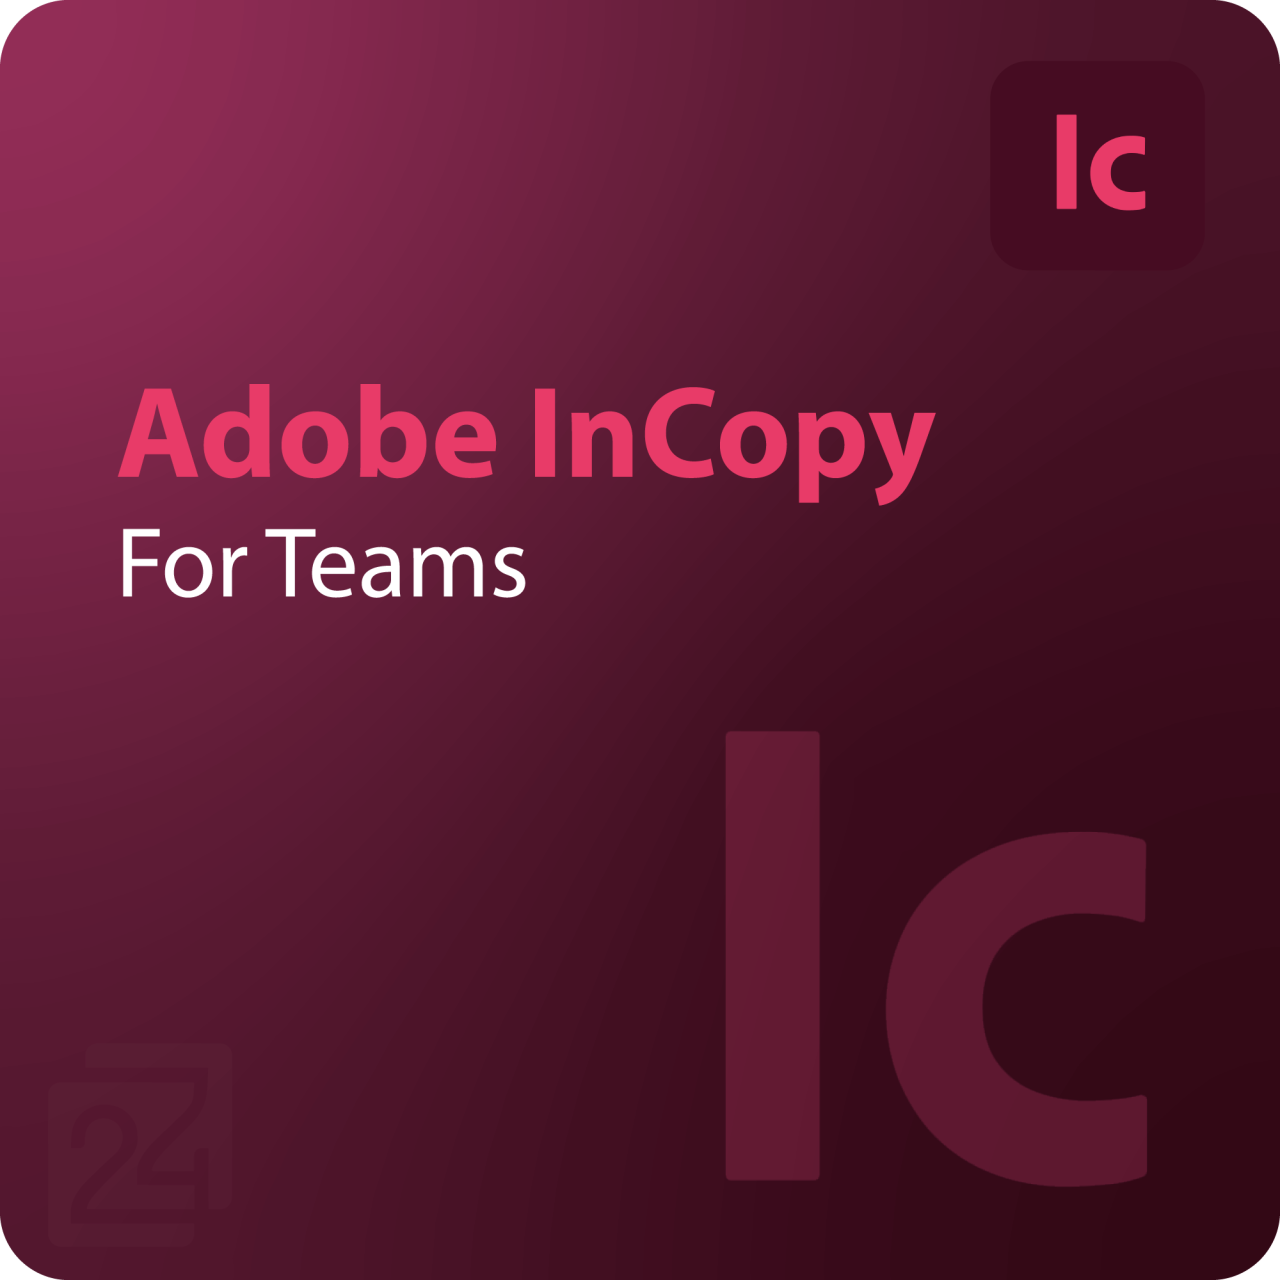 Adobe InCopy for Teams